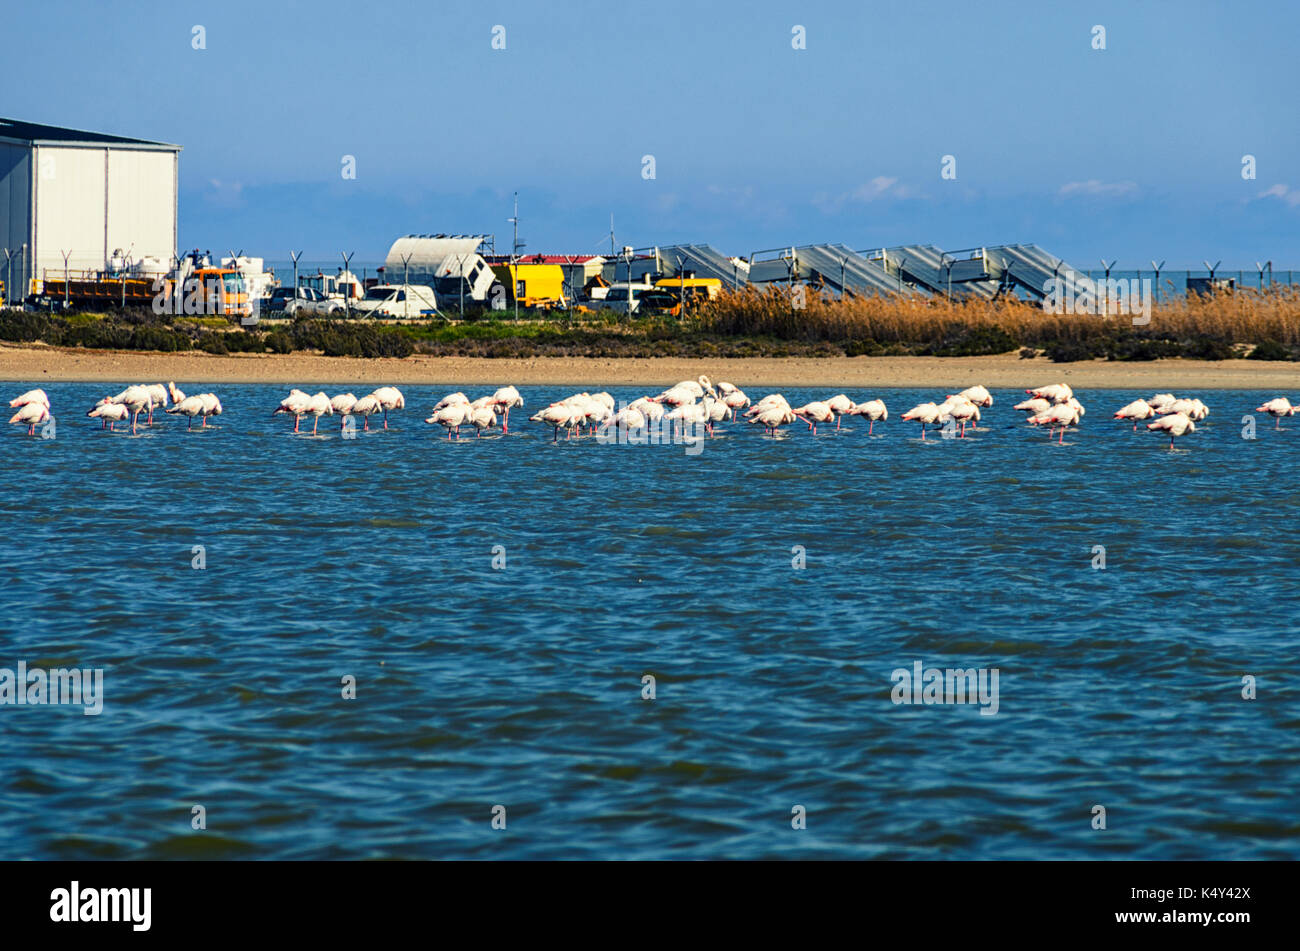 Flamingo on the salt lake in Larnaca, Cyprus. Stock Photo